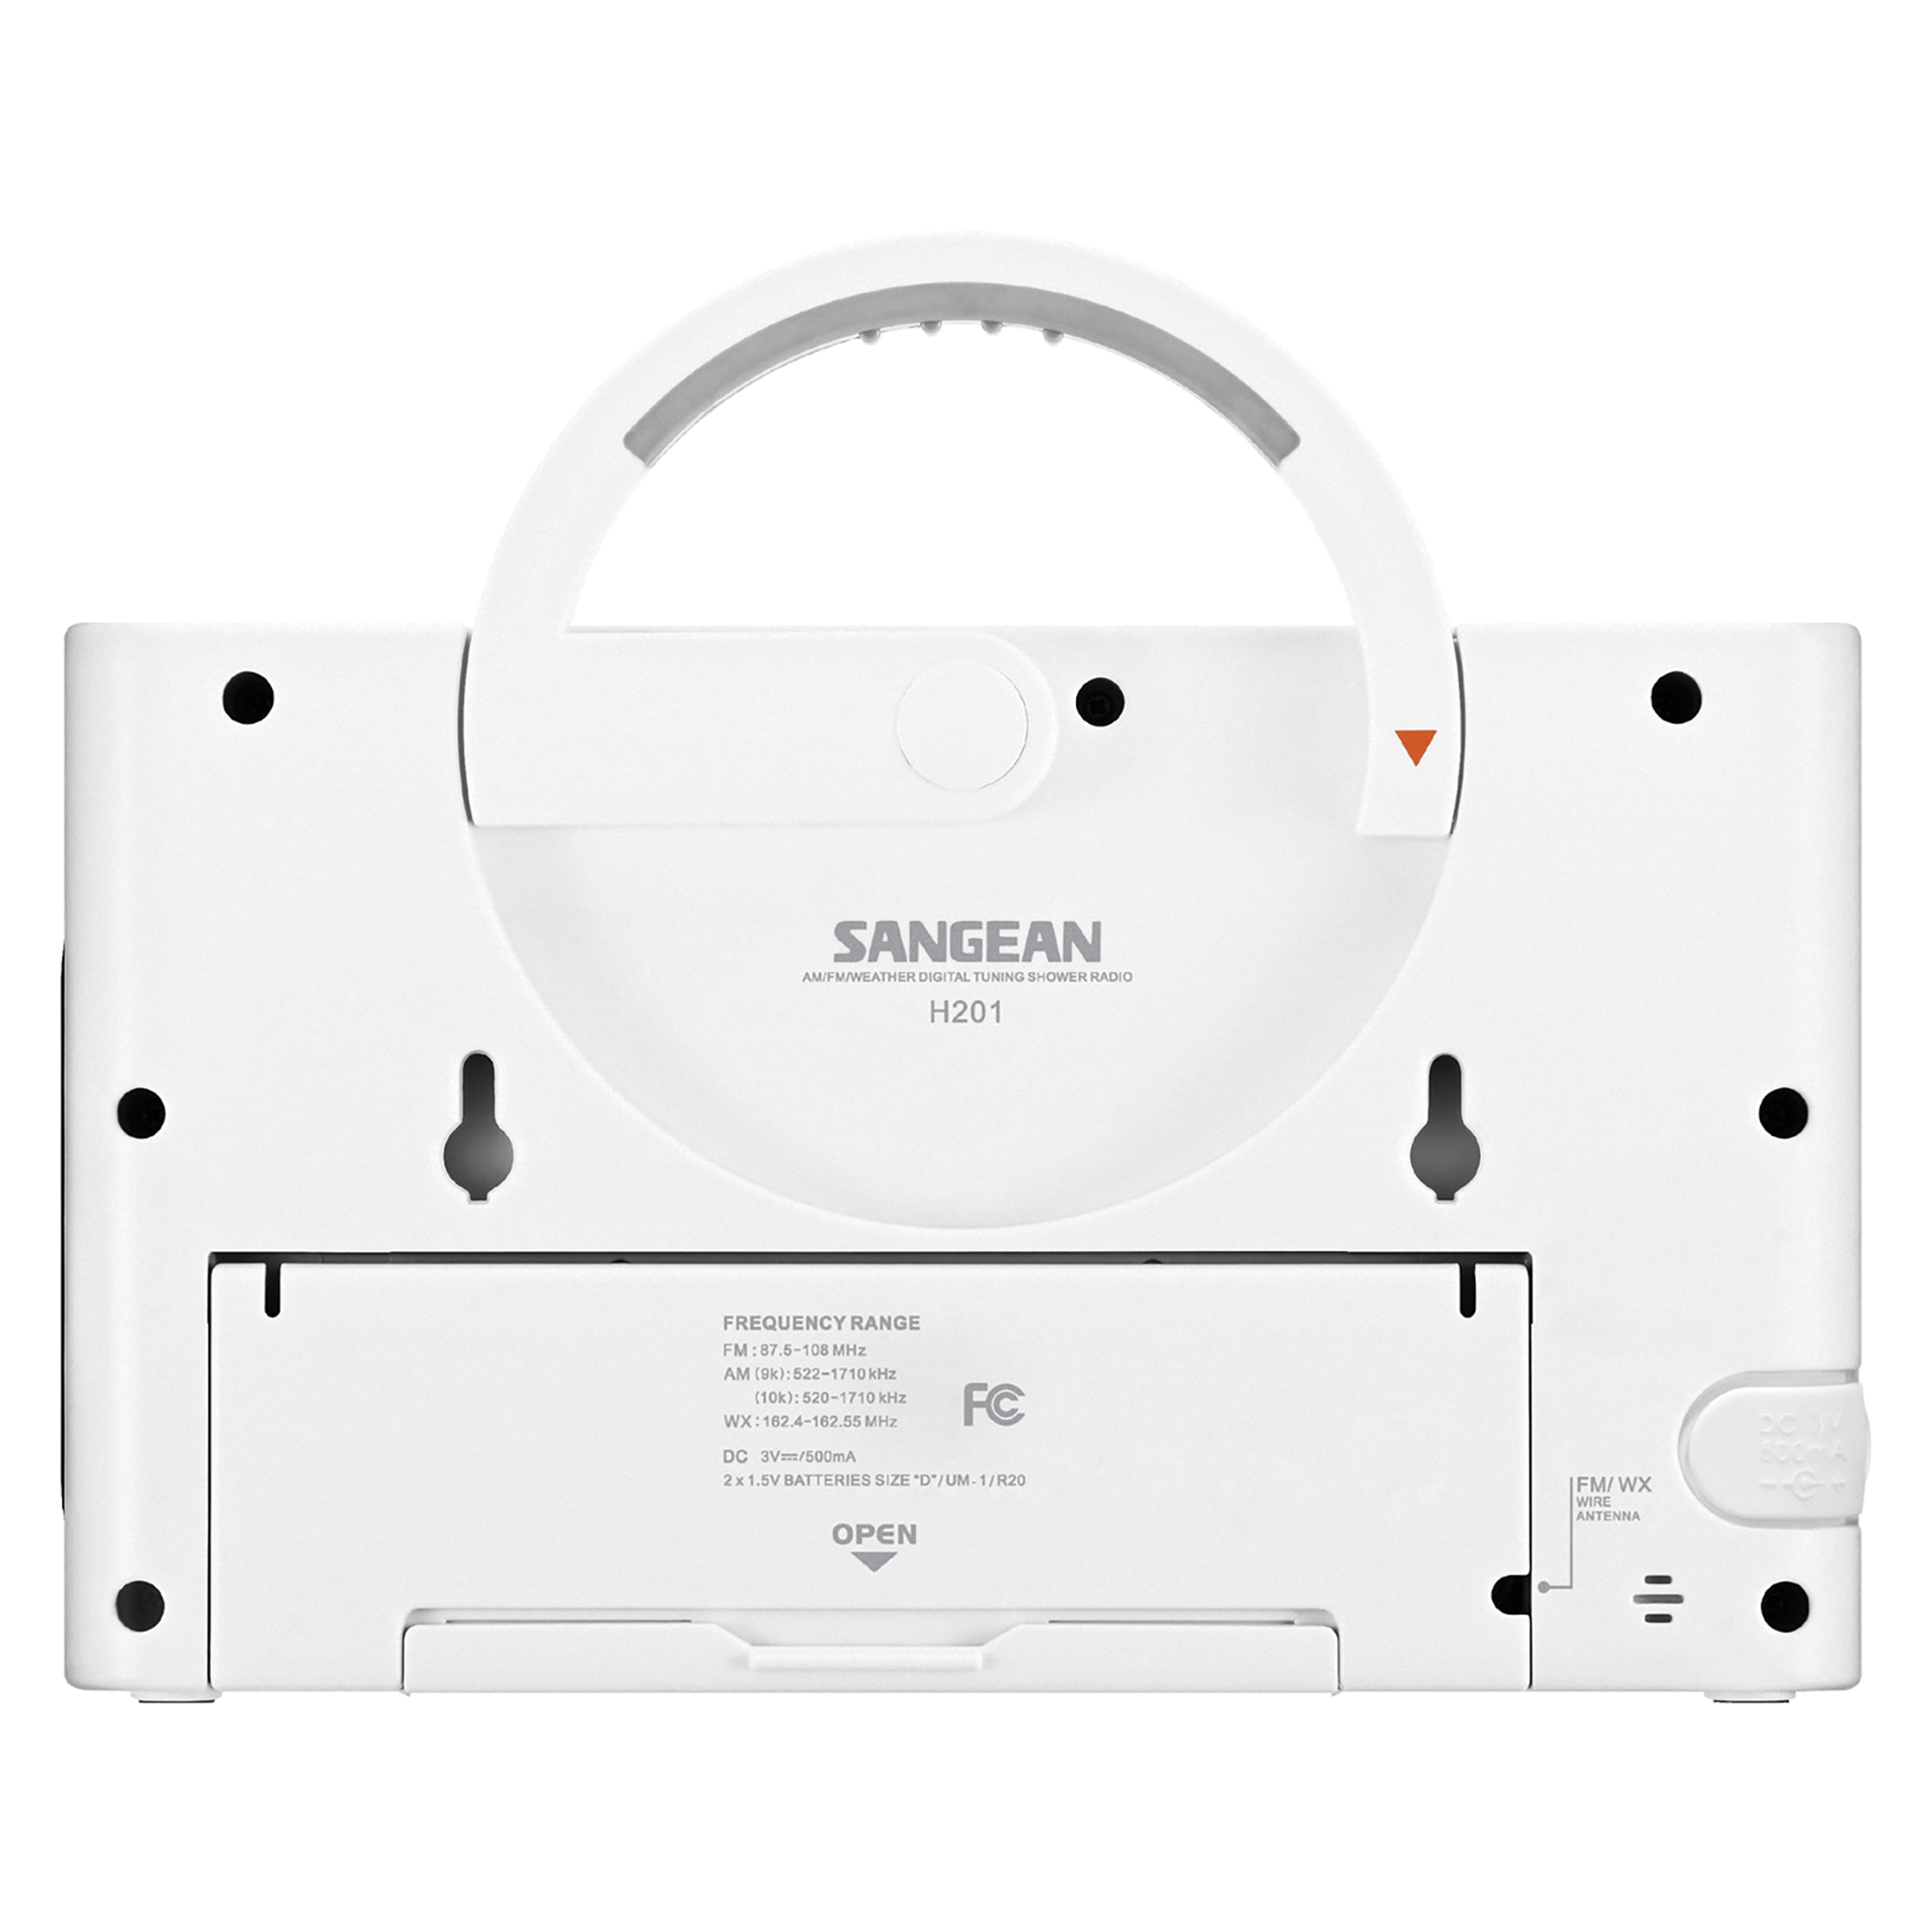 Sangean Portable AM/FM Radio, White, H201 - image 5 of 5